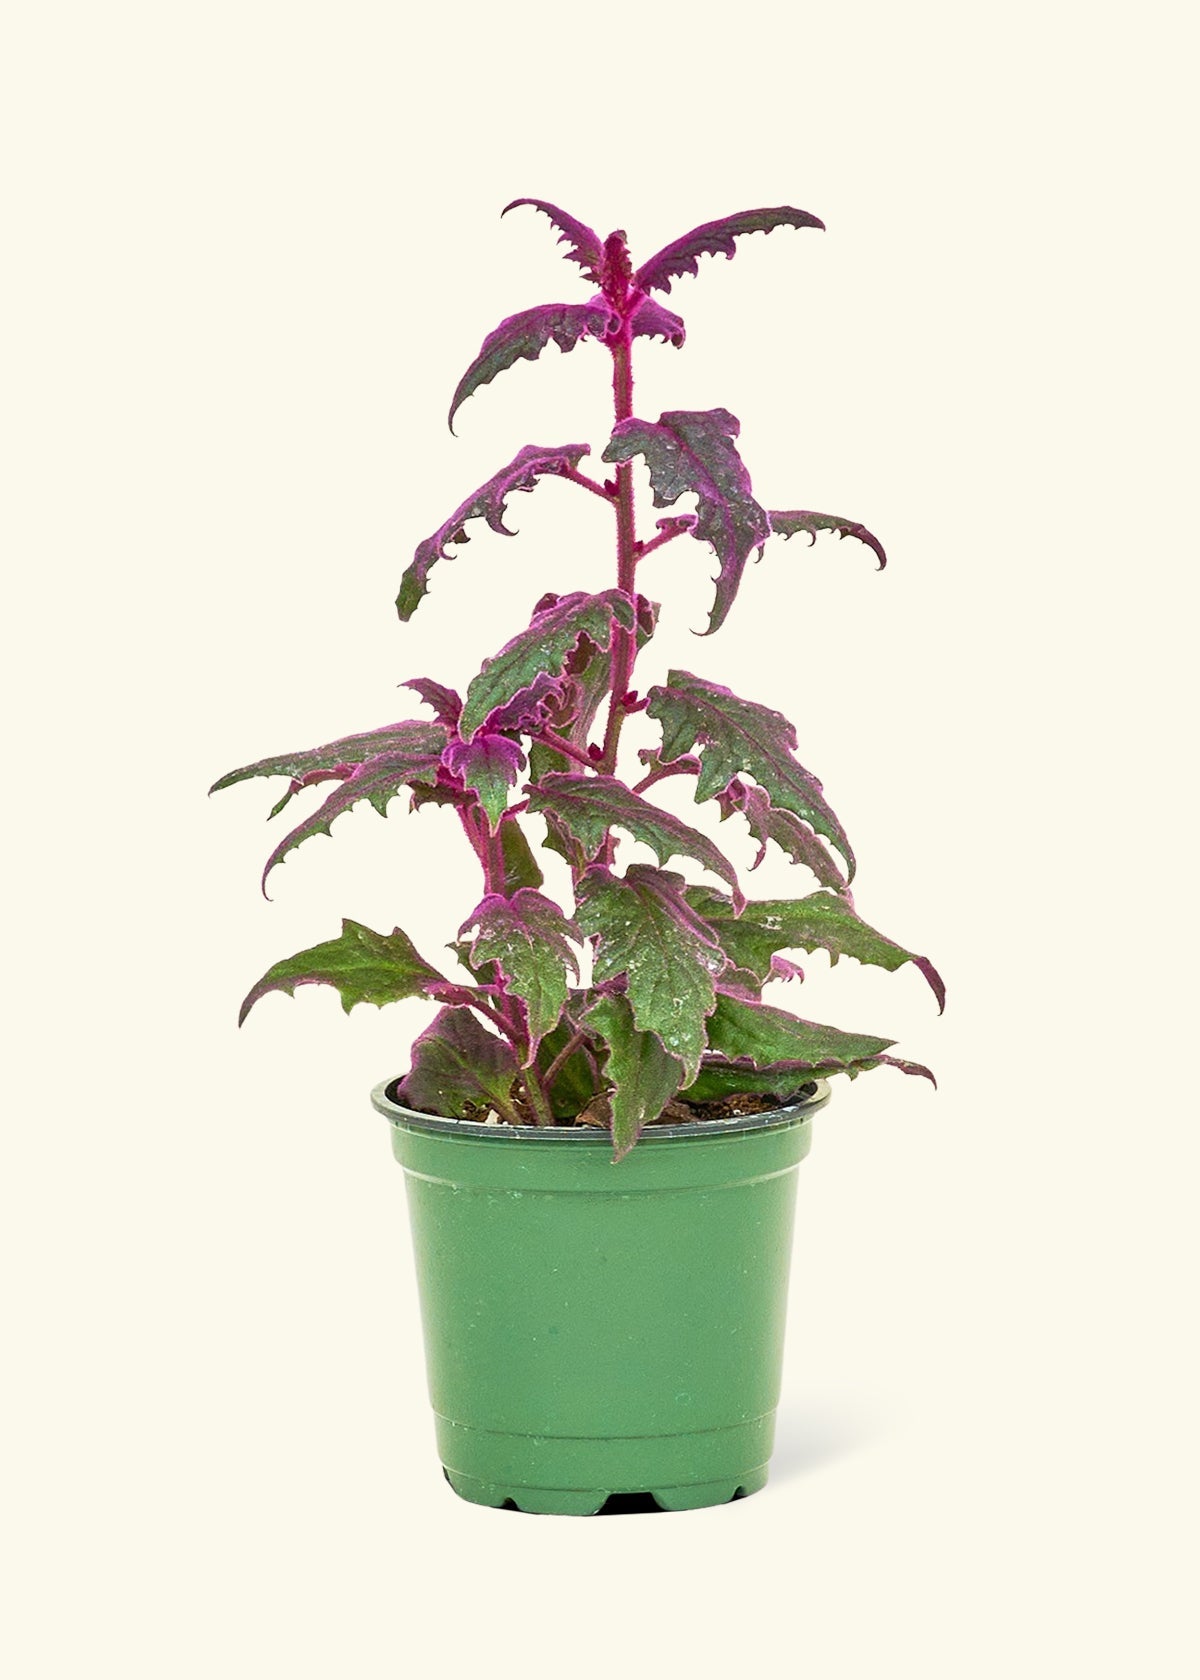 Small Purple Passion Plant (Gynura aurantiaca) in a grow pot.